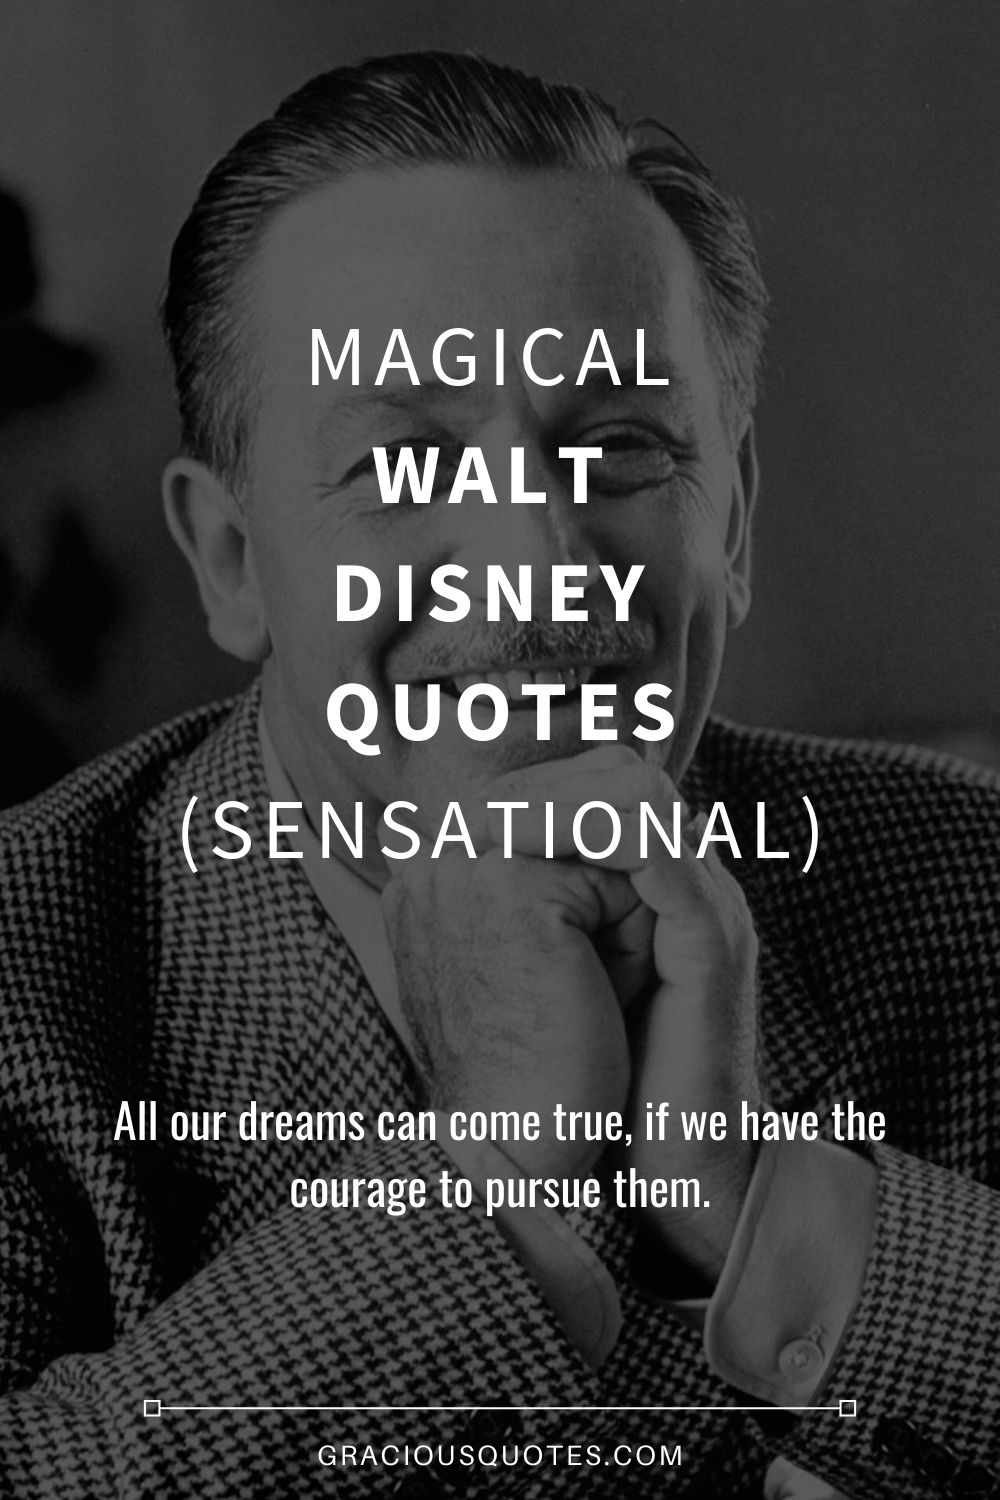 Magical Walt Disney Quotes (SENSATIONAL) - Gracious Quotes